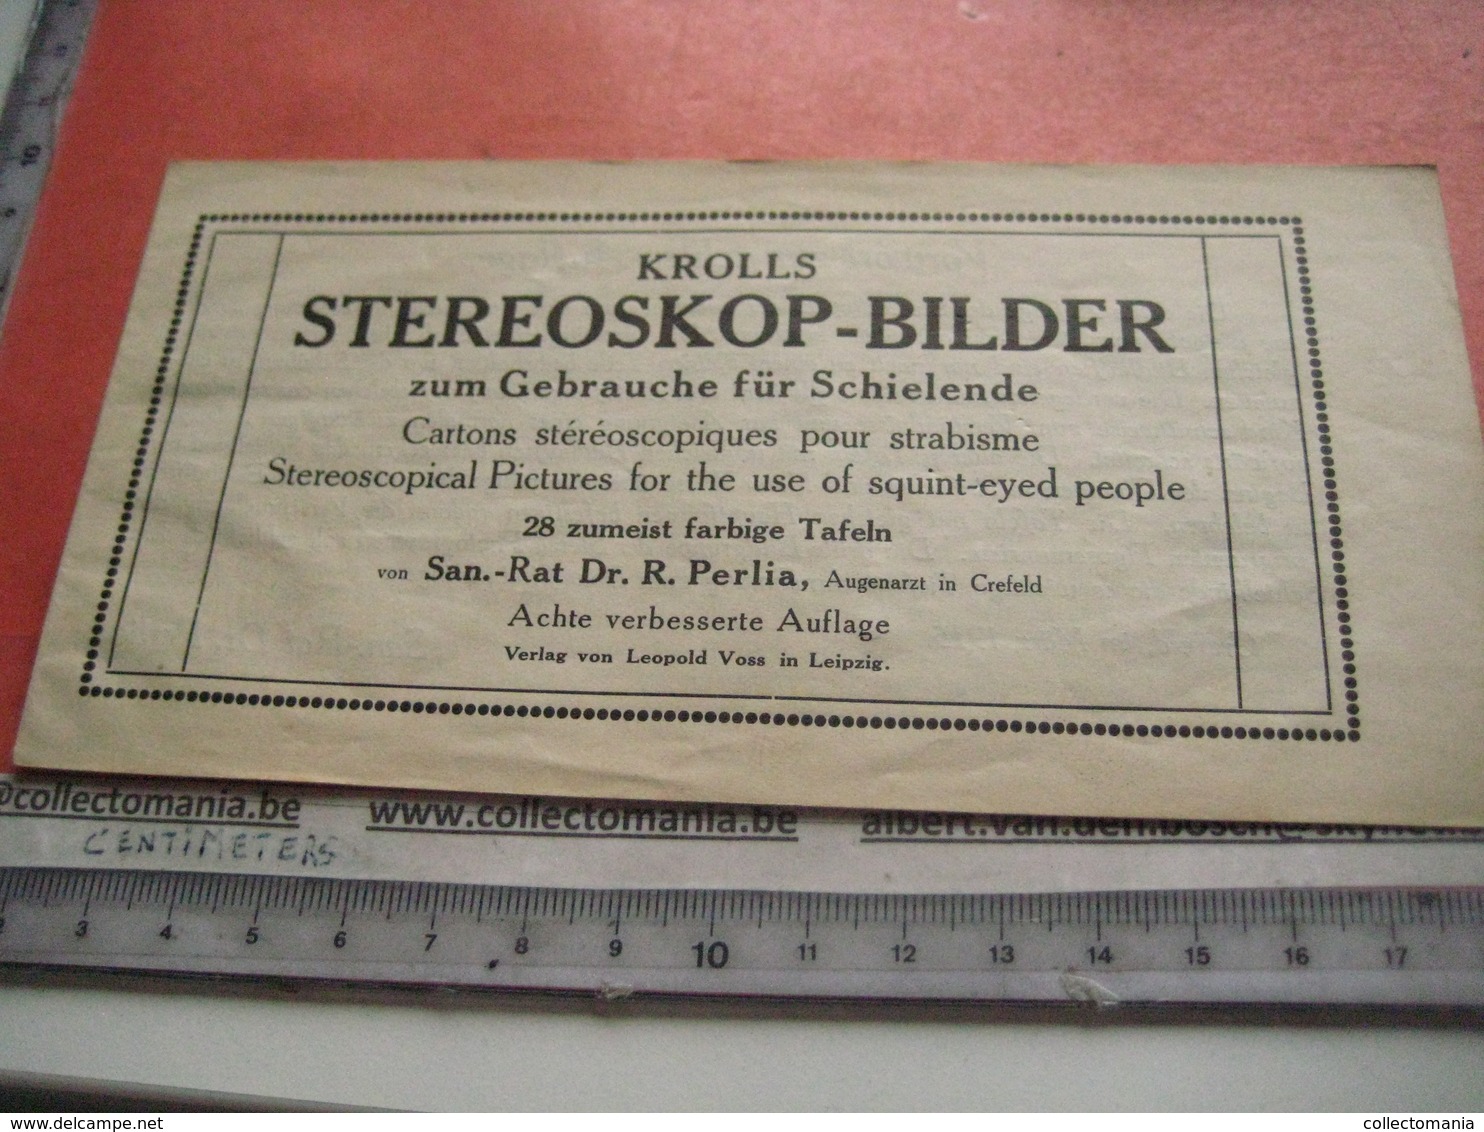 Stereo Karten SCHIELENDE kinder,  STRABISM  squint-eyed c1920 WELLS, KROLL's, Voss Leipzig stereoskop Bilder 90% litho